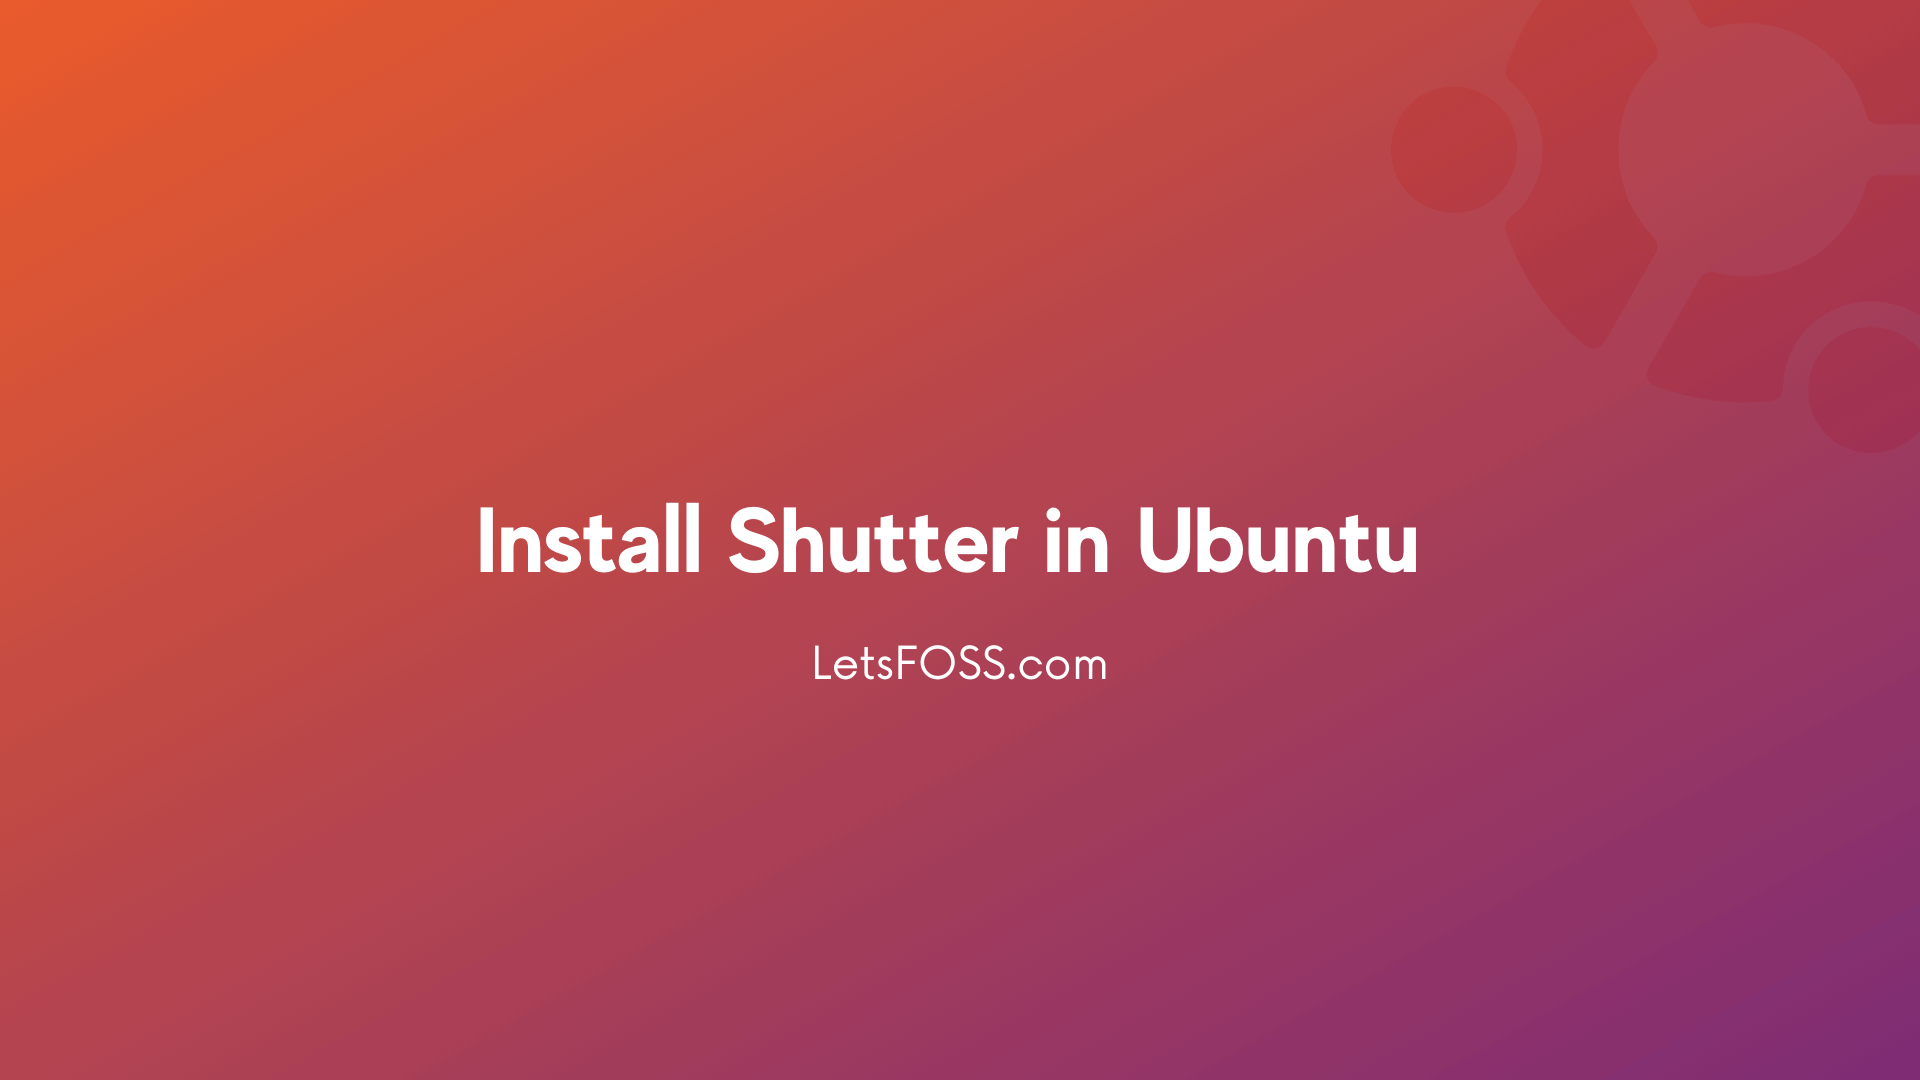 Install Shutter in Ubuntu